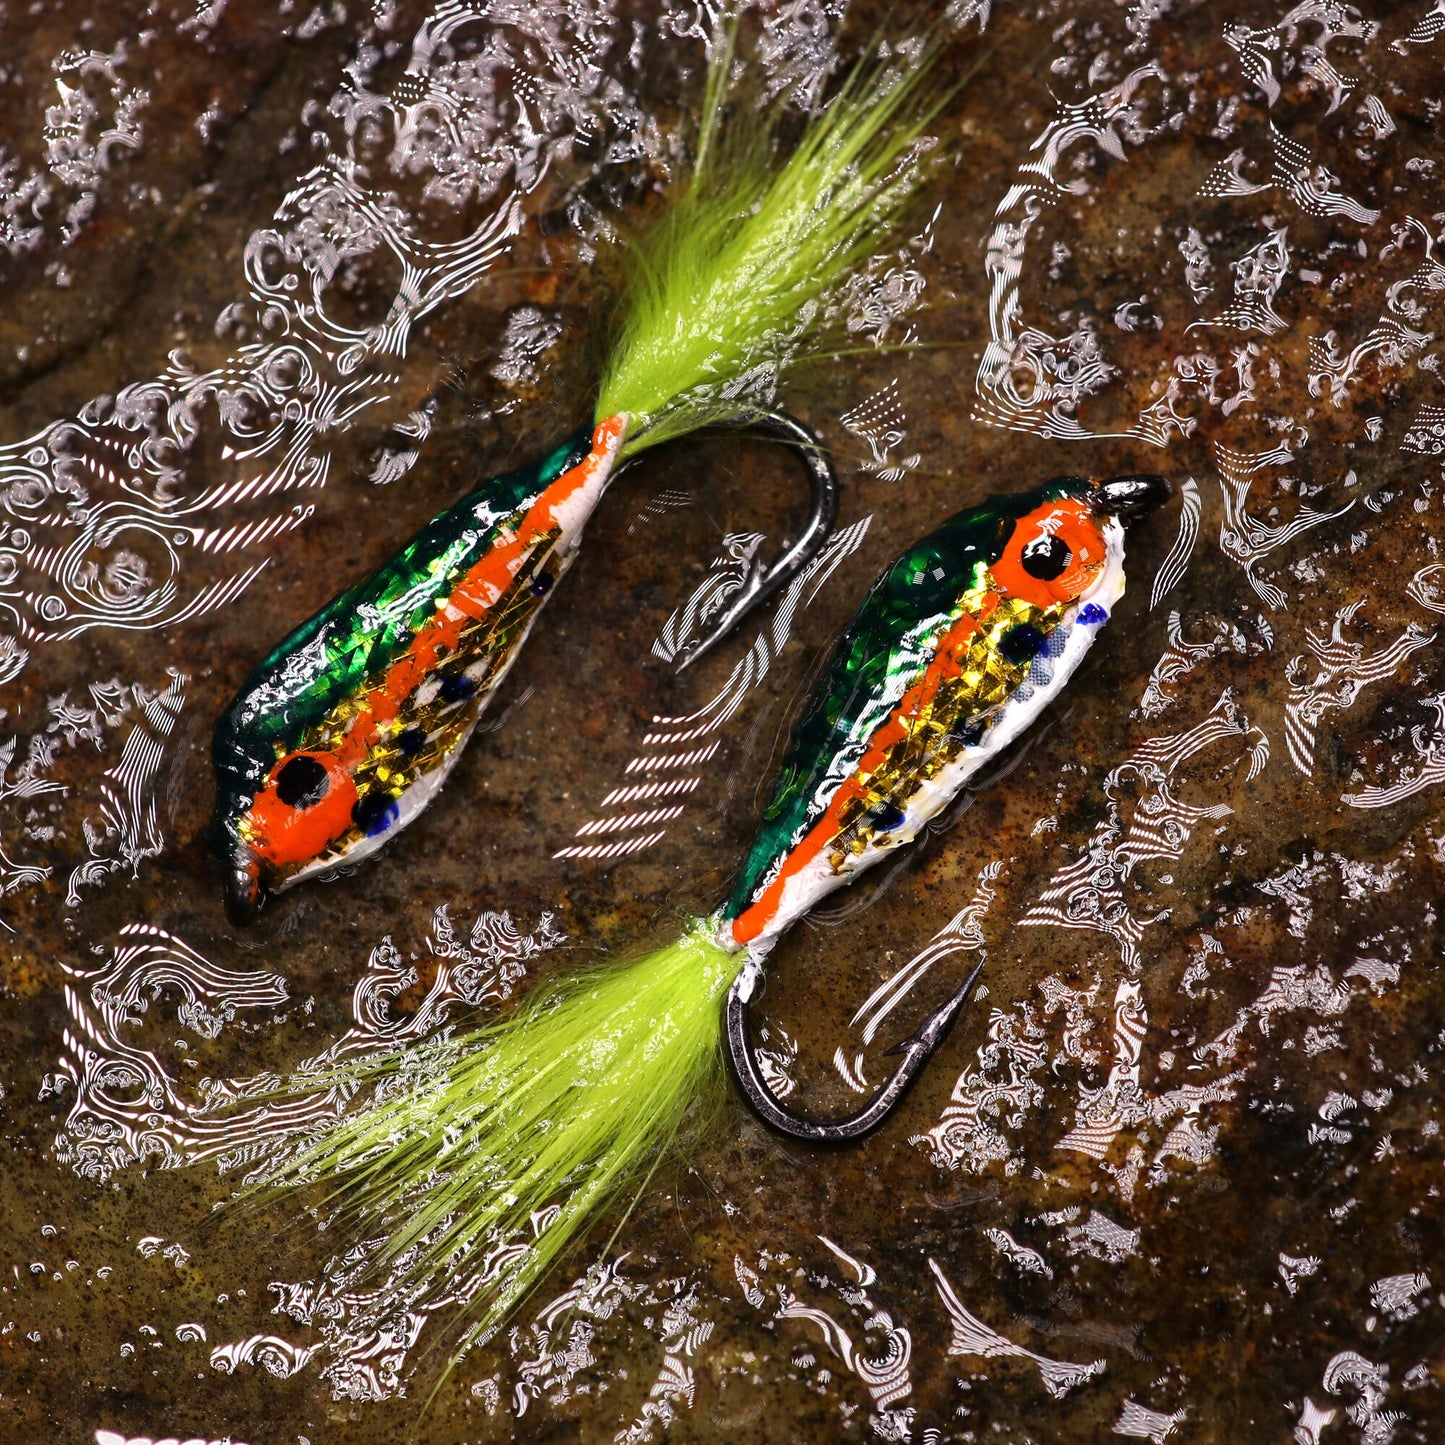 Bimoo 2PCS Rainbow Trout Epoxy Body Minnows Fly Fishing Flies Streamer Fly Size #10